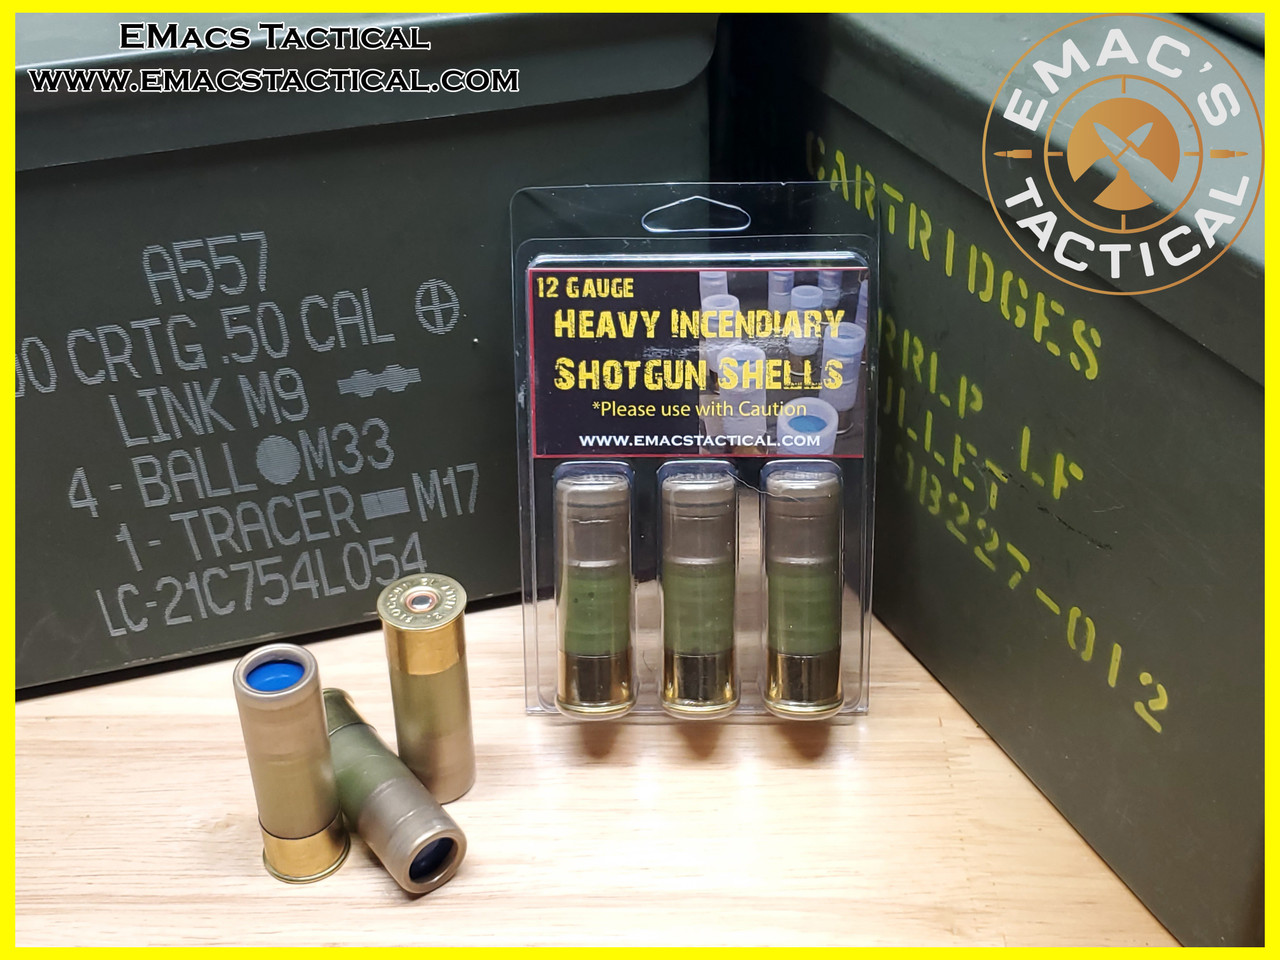 12g Heavy Incendiary Shotgun Shell 3 Pack - Exotic Ammunition